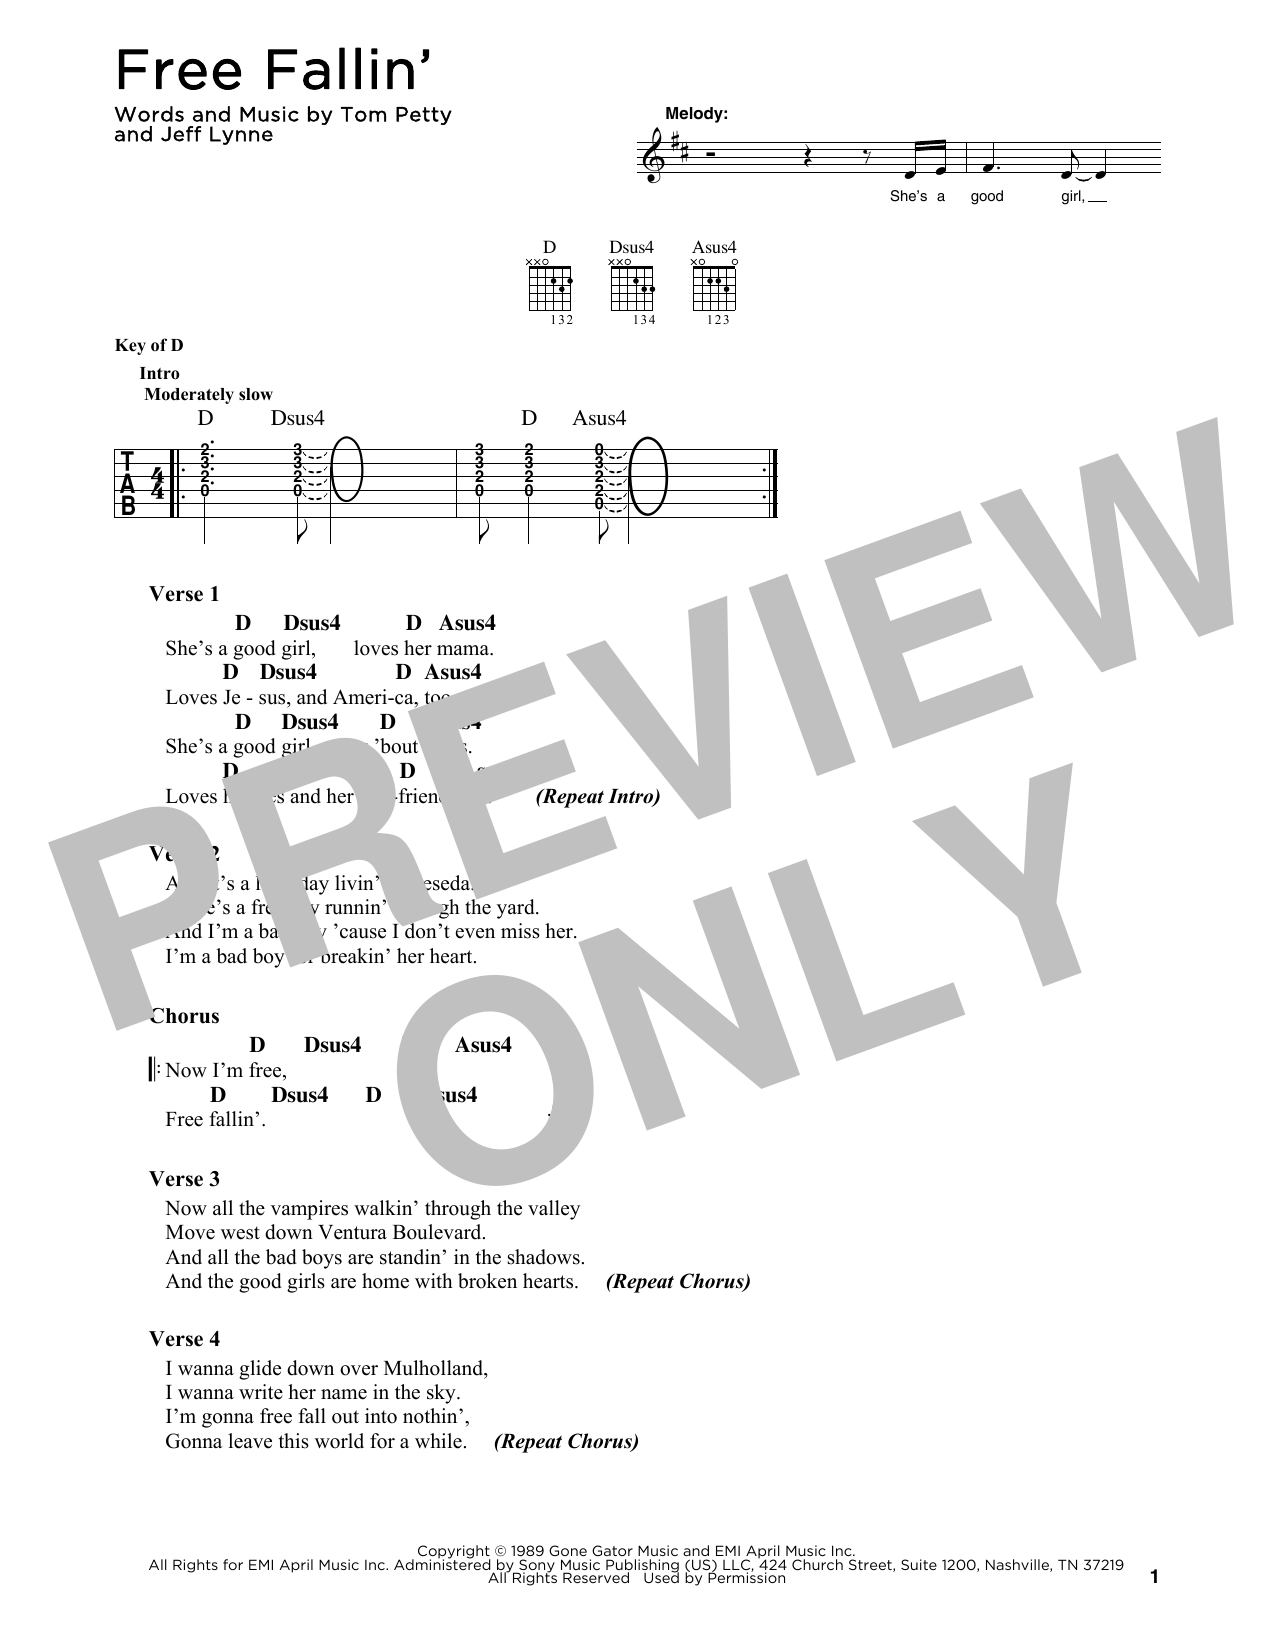 Tom Petty Free Fallin' sheet music notes printable PDF score